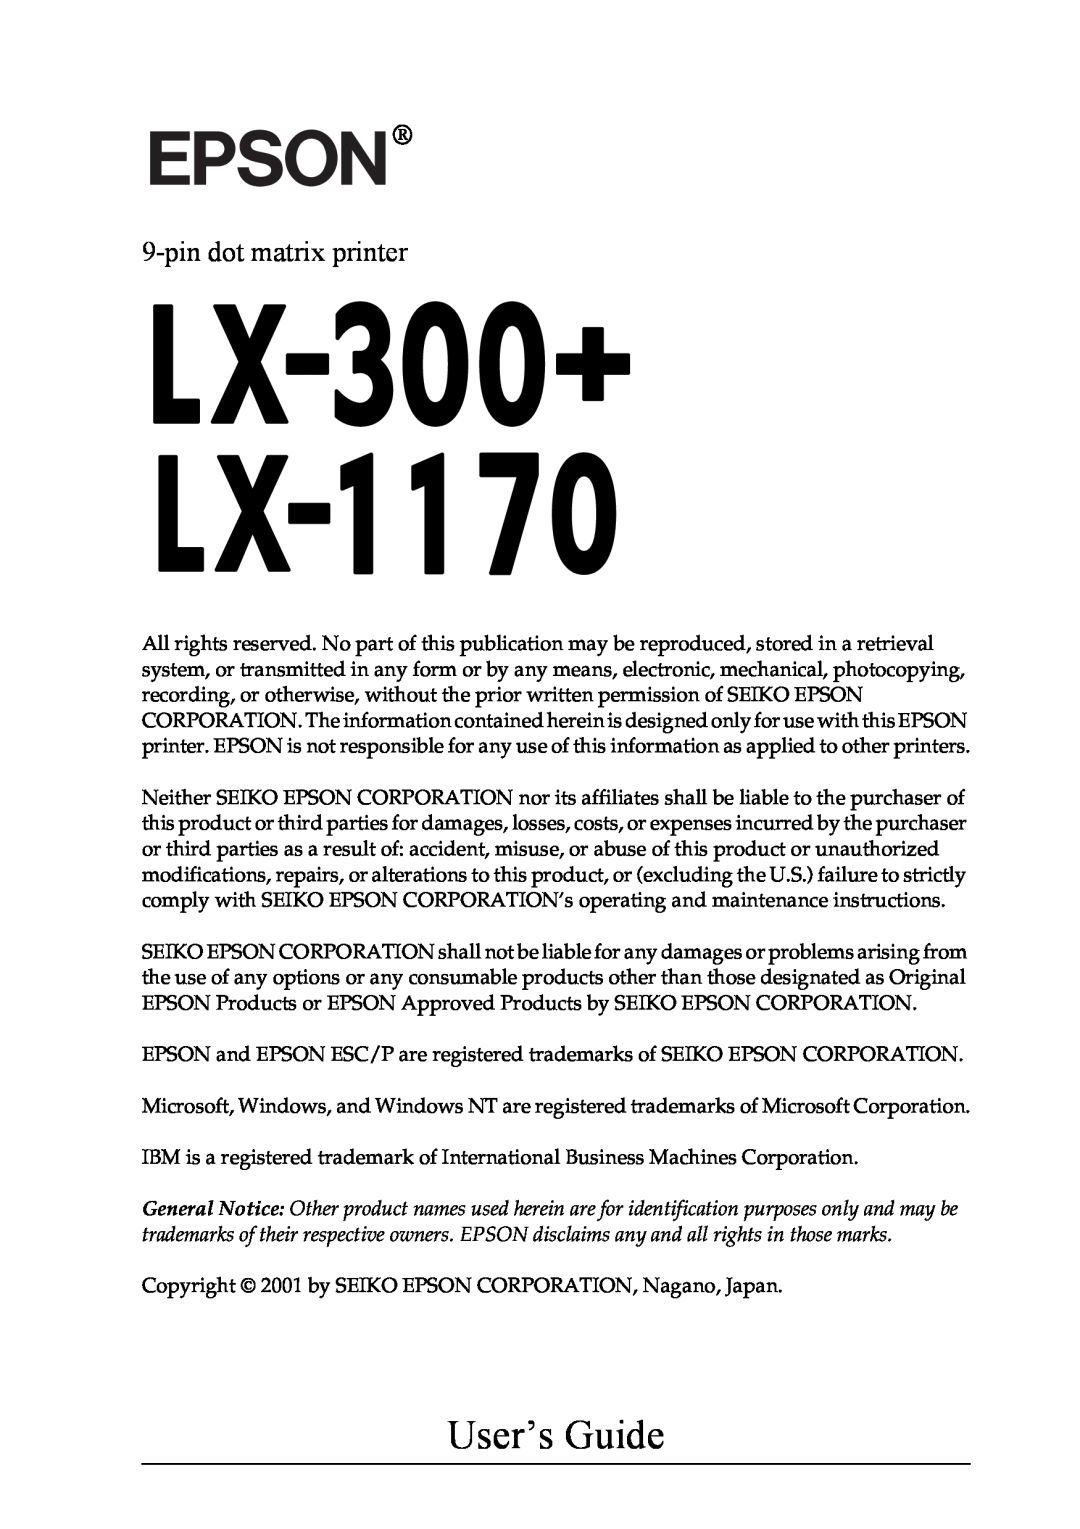 Epson LX-1170 manual User’s Guide, pin dot matrix printer 